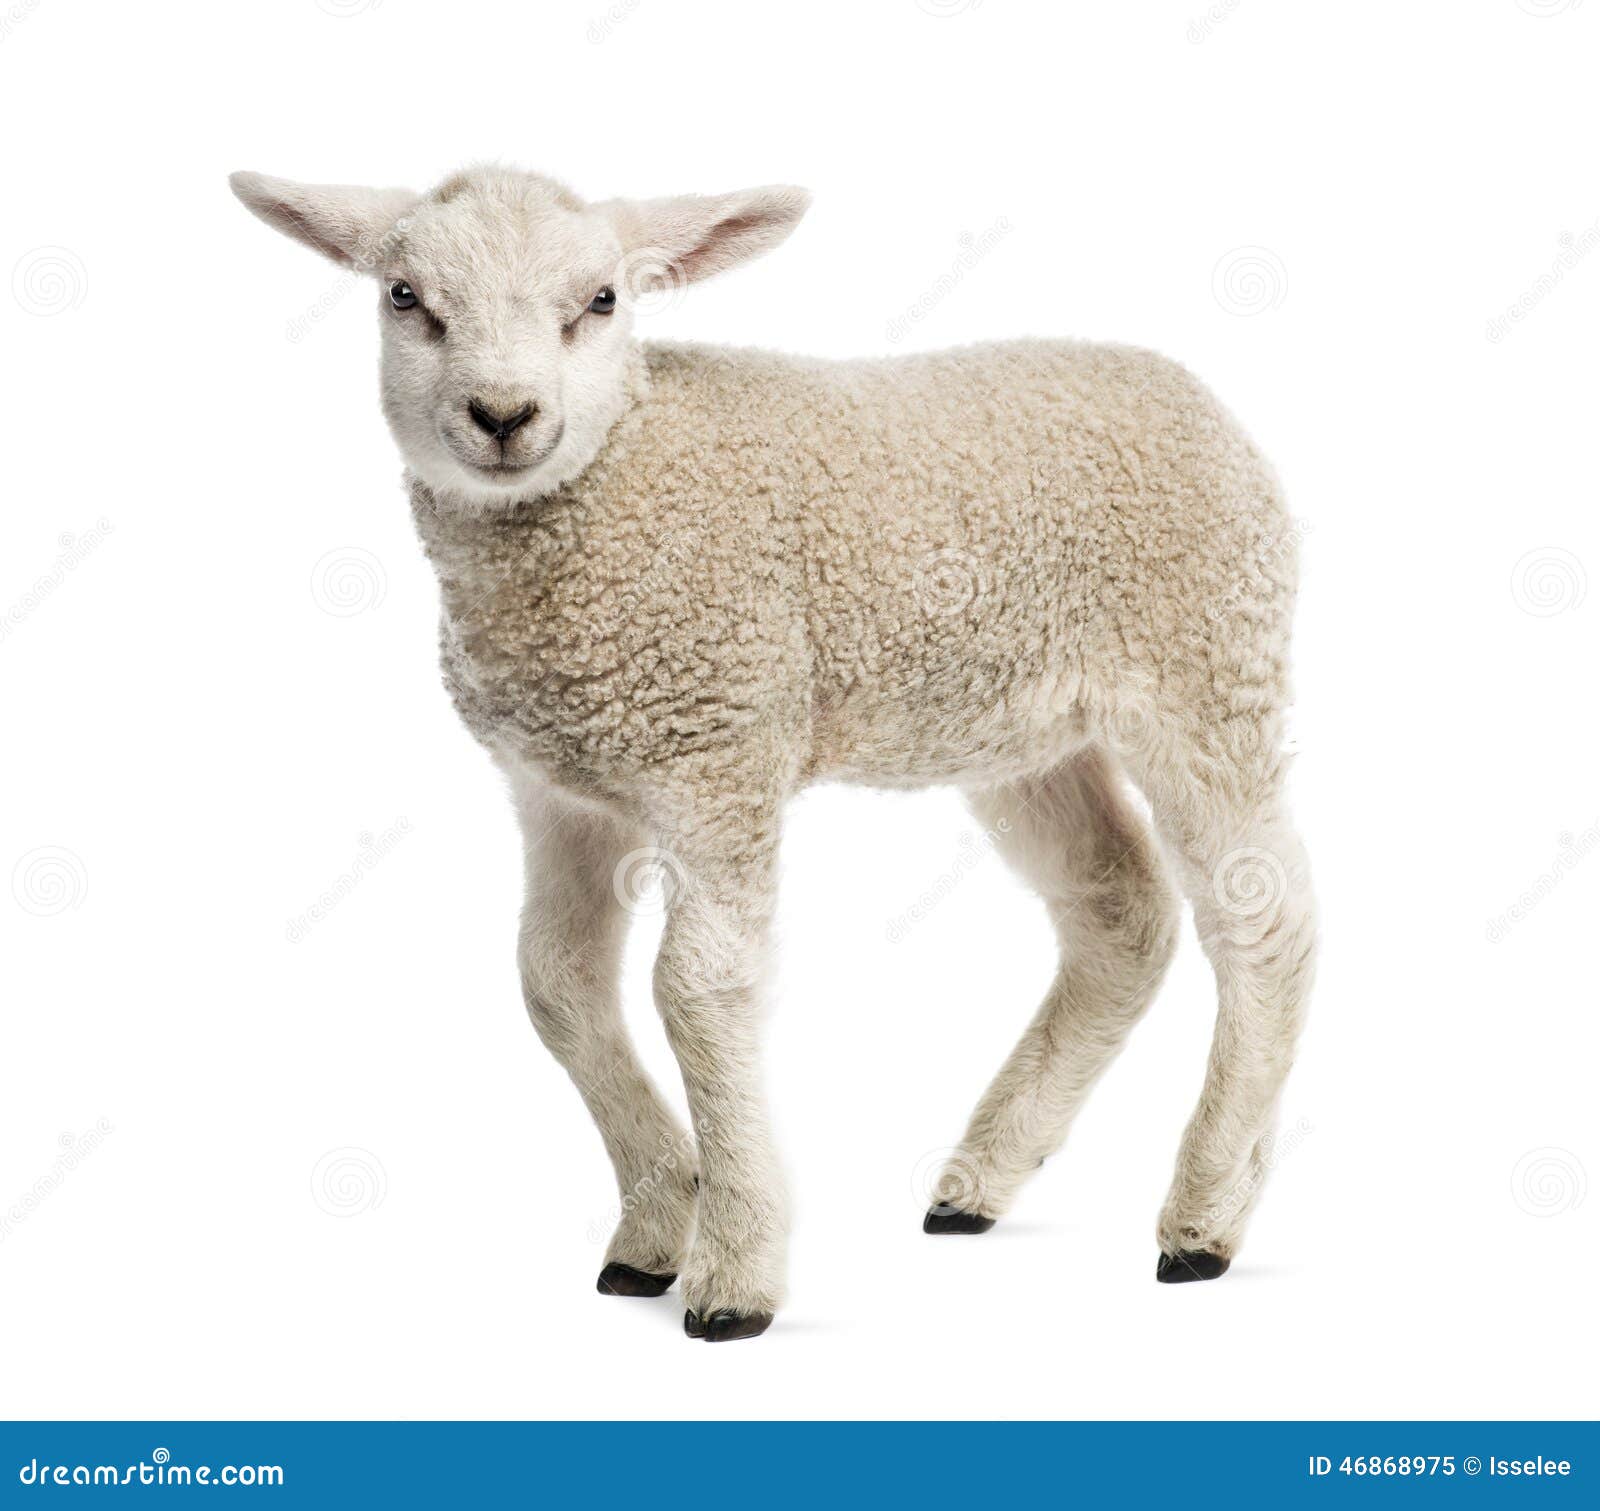 lamb (8 weeks old)